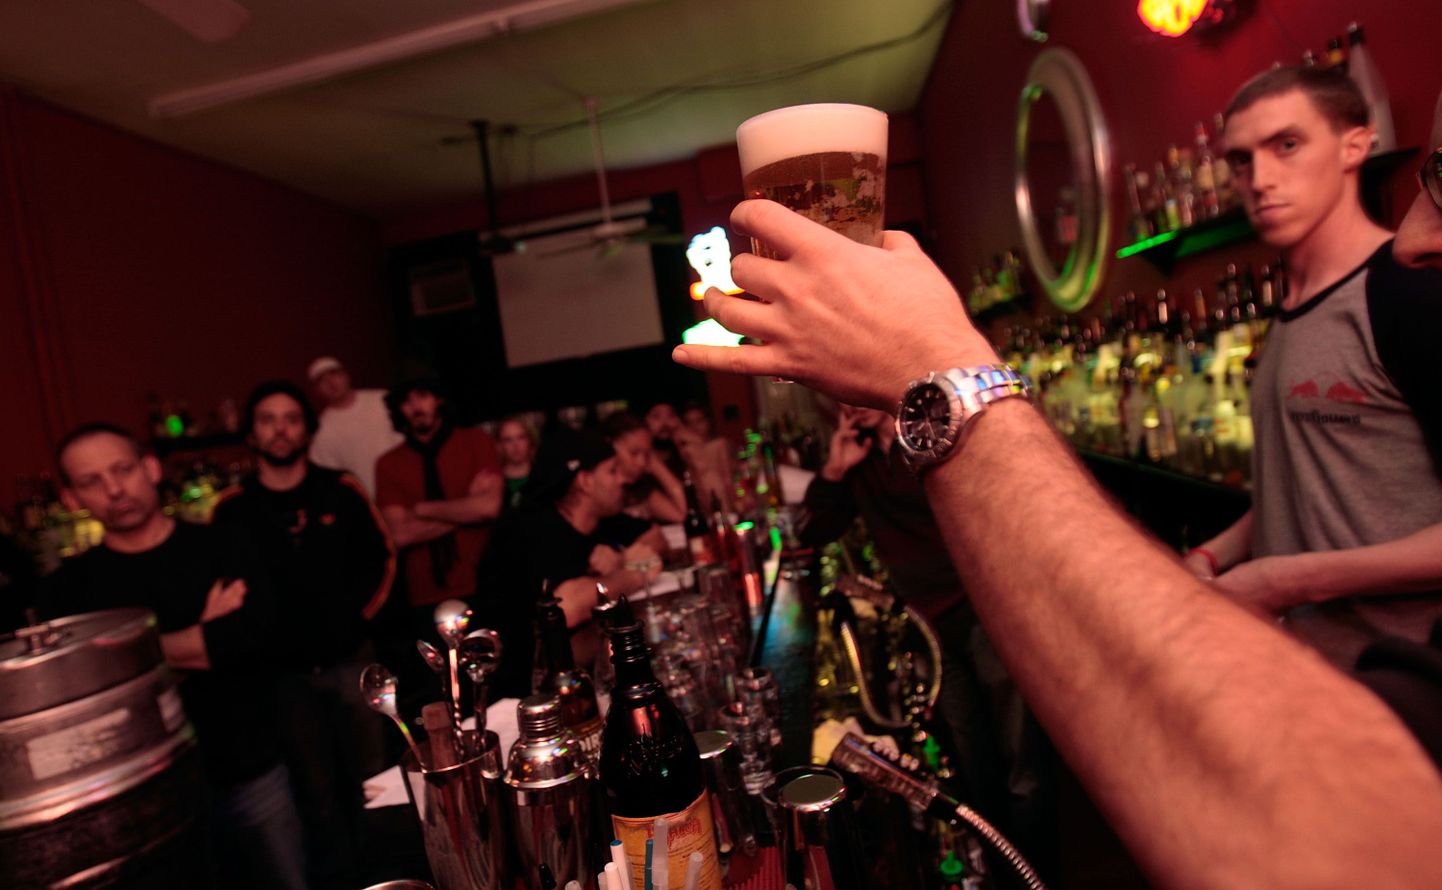 Briti linn jagab meesostjatele tasuta õlut